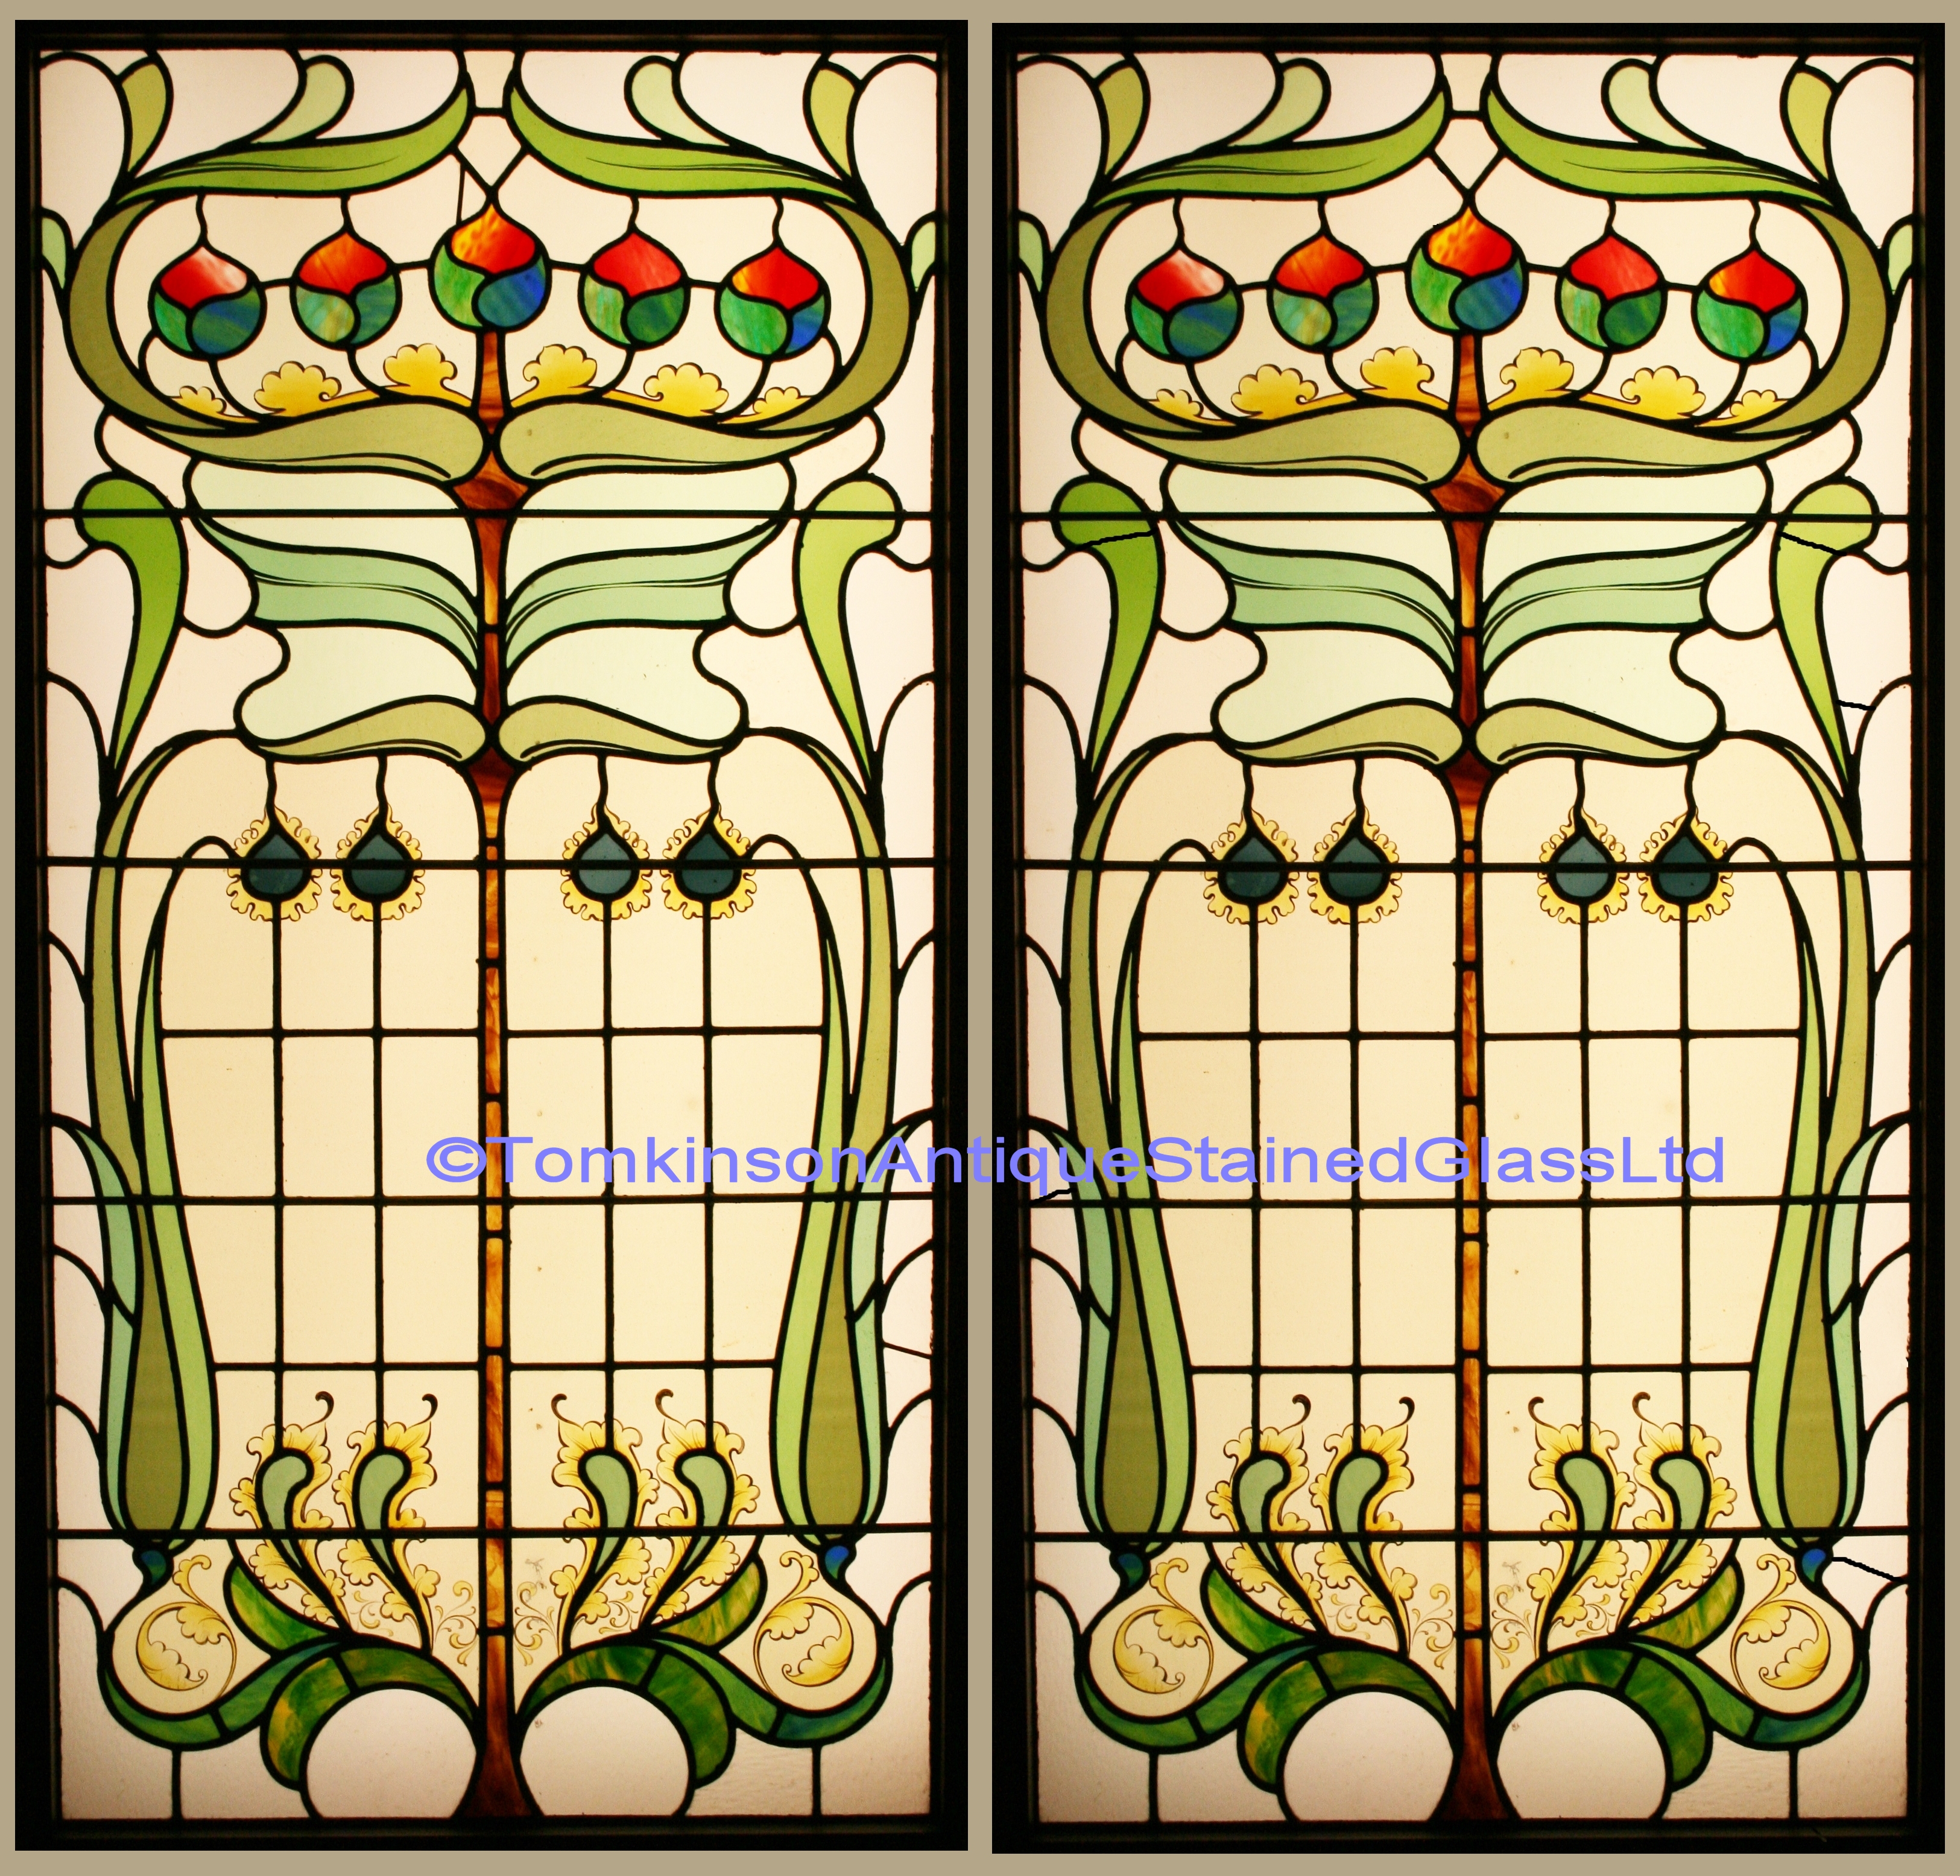 Ref: Ed331 - 2 Edwardian Stained Glass Windows - Art Nouveau